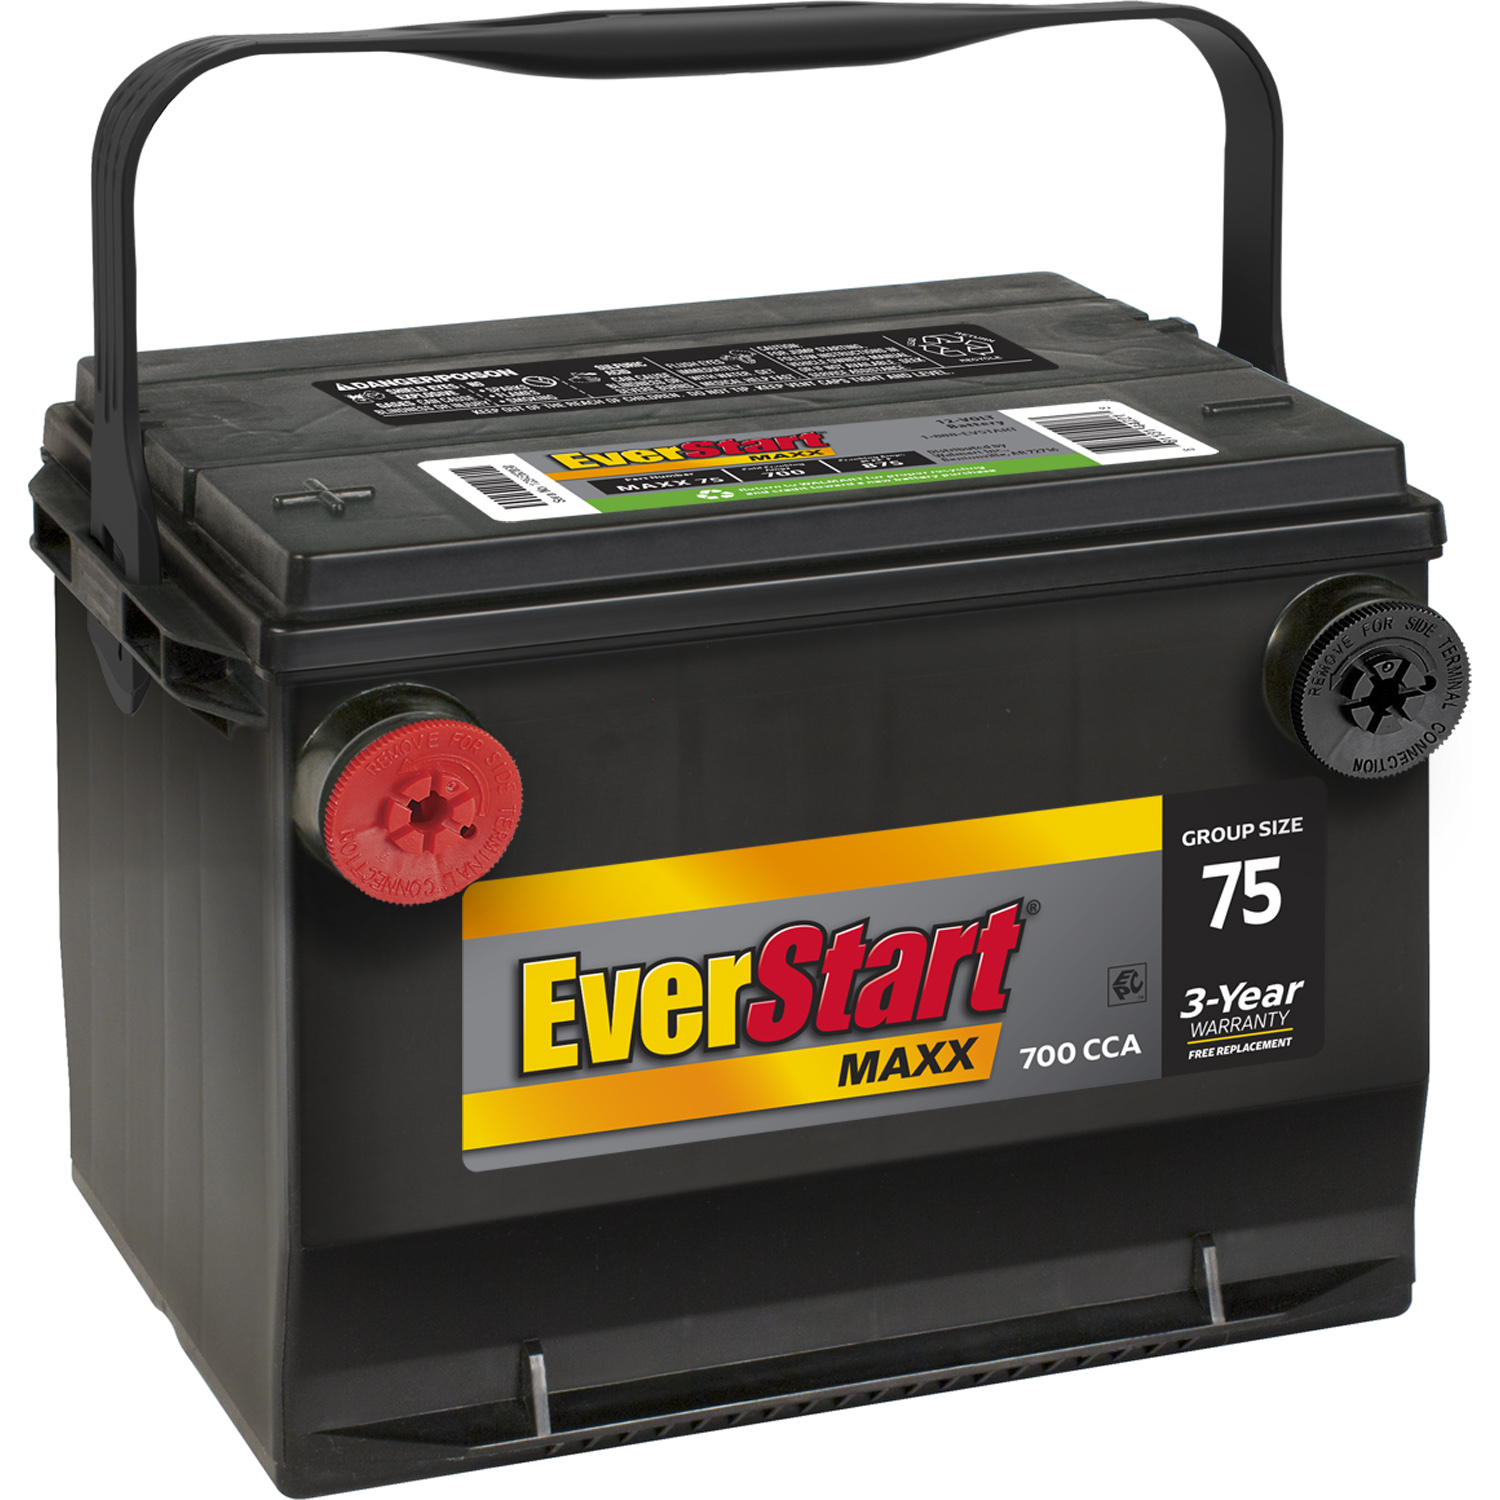 EverStart Maxx Lead Acid Automotive Battery, Group 75 12 Volt, 700 CCA - image 1 of 7